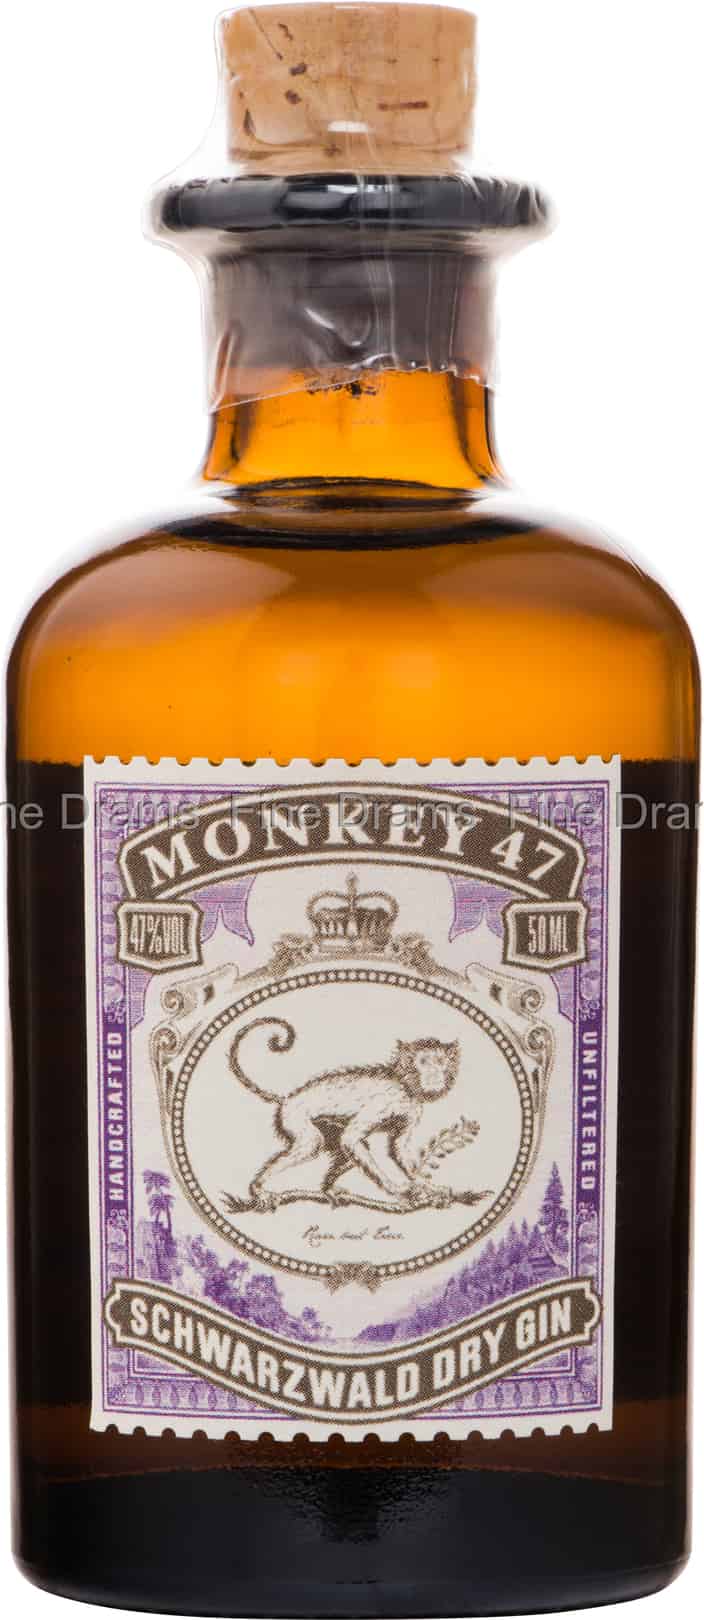 https://images.finedrams.com/image/43557-mediumlarge-1550412017/monkey-47-schwarzwald-dry-gin-miniature.jpg